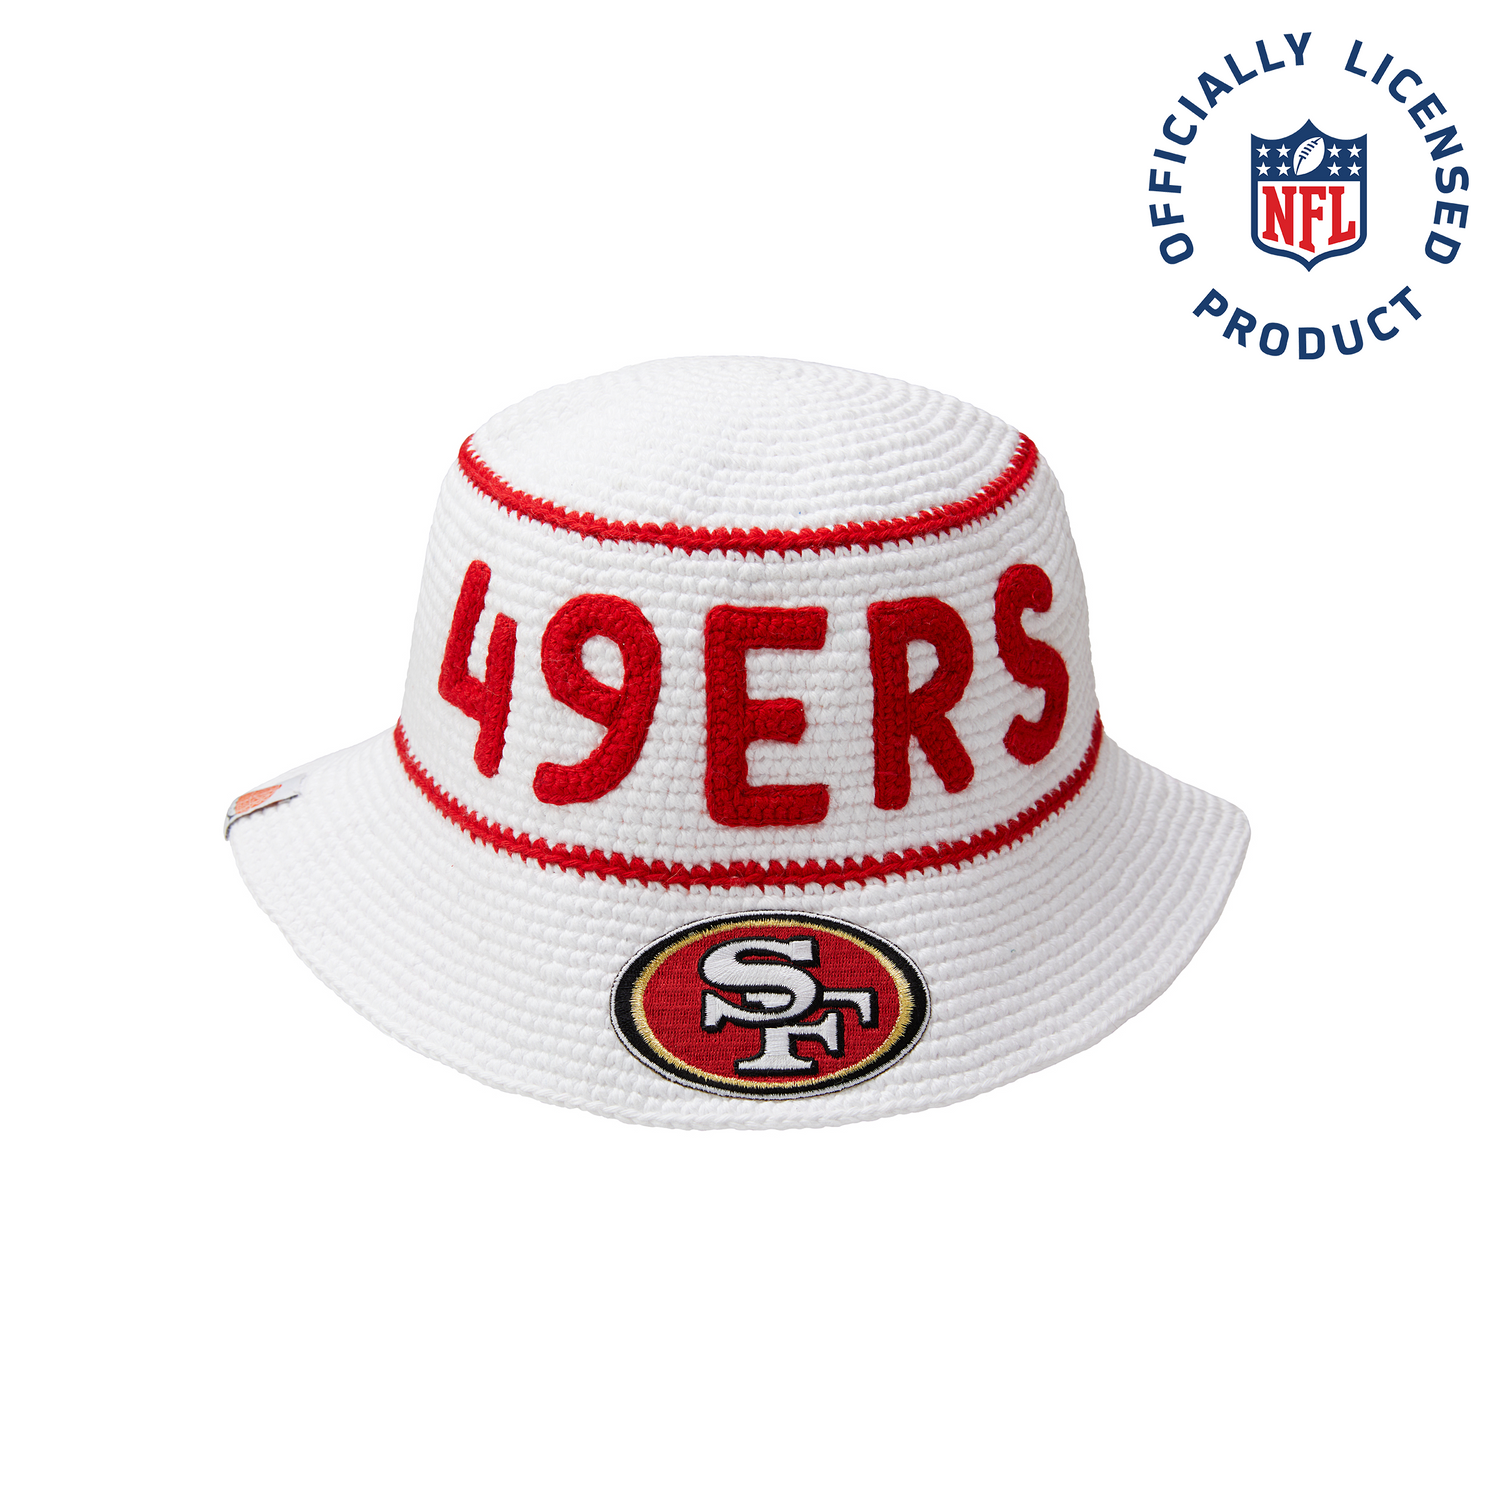 The 49ers NFL Bucket Hat